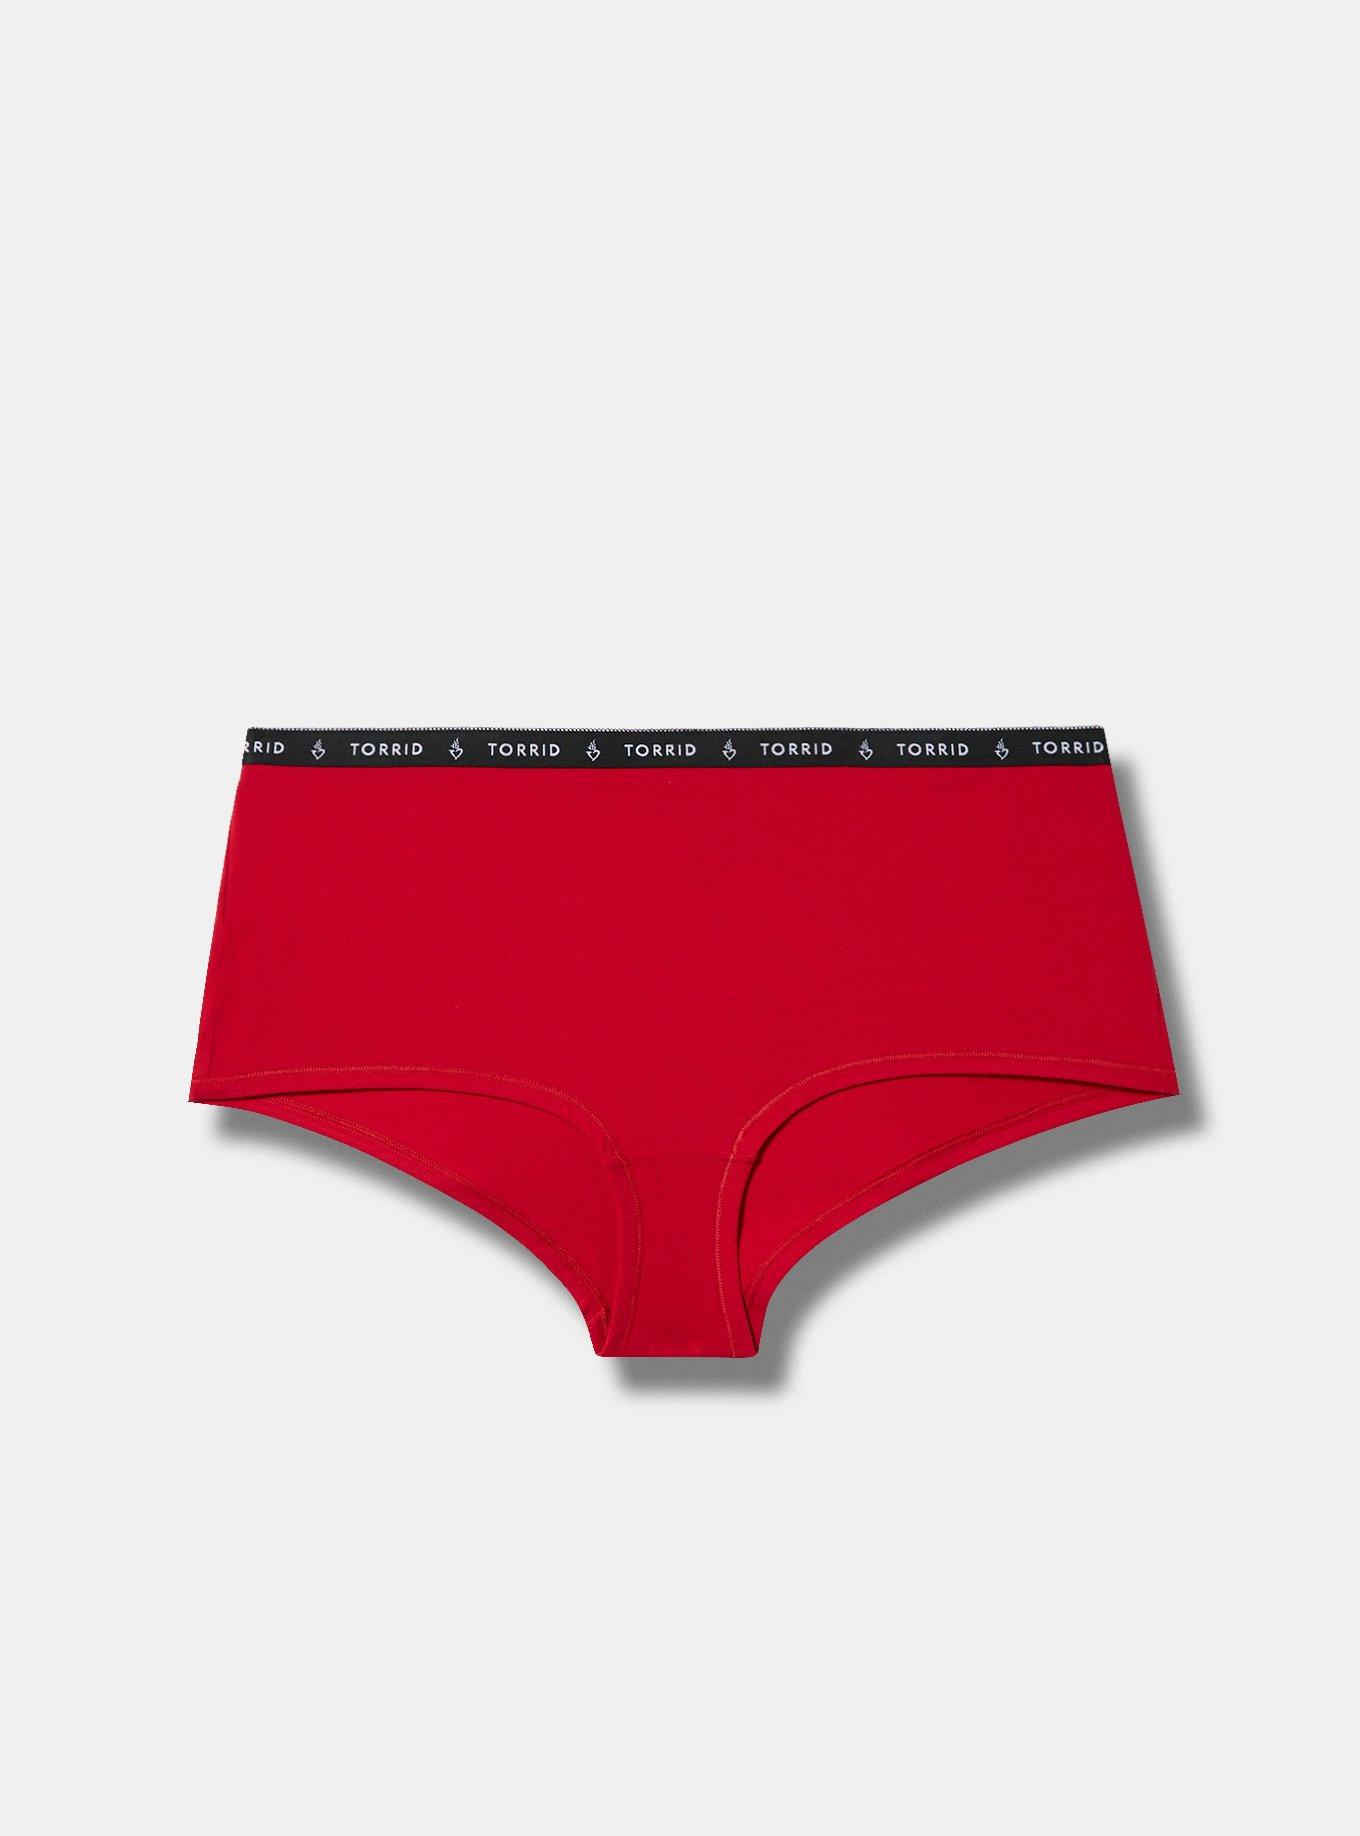 Plus Size - Cotton Mid-Rise Thong Logo Panty - Torrid